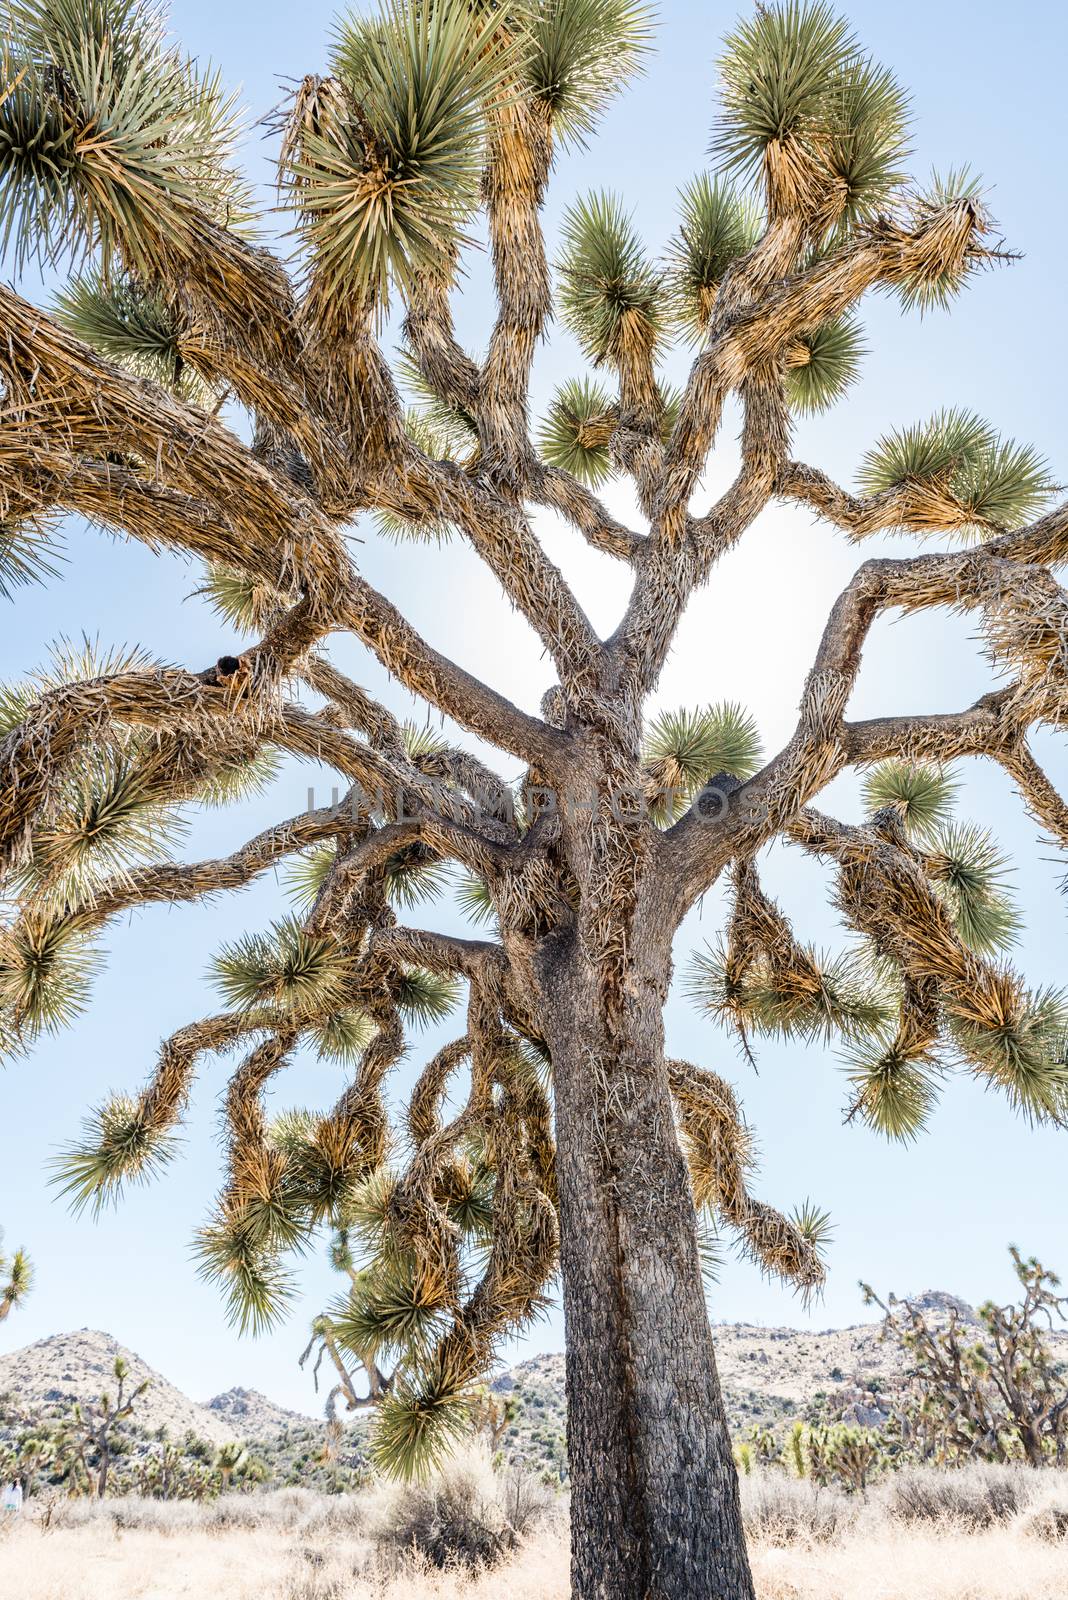 Joshua tree (Yucca brevifolia) along Stubbe Springs Loop in Joshua Tree National Park, California